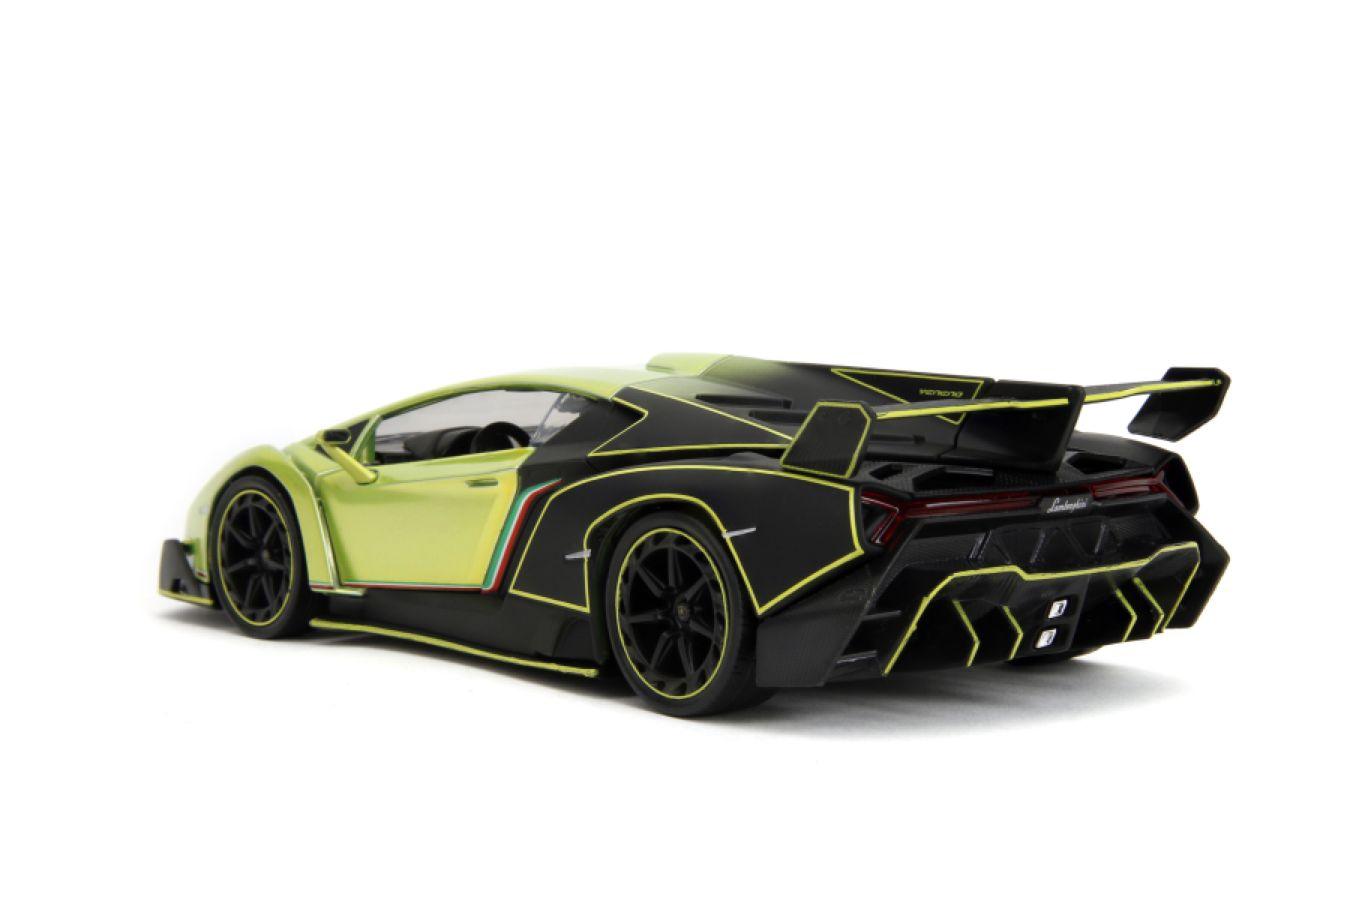 JAD35190 Pink Slips - Lamborghini Veneno 1:24 Scale Diecast Vehicle - Jada Toys - Titan Pop Culture